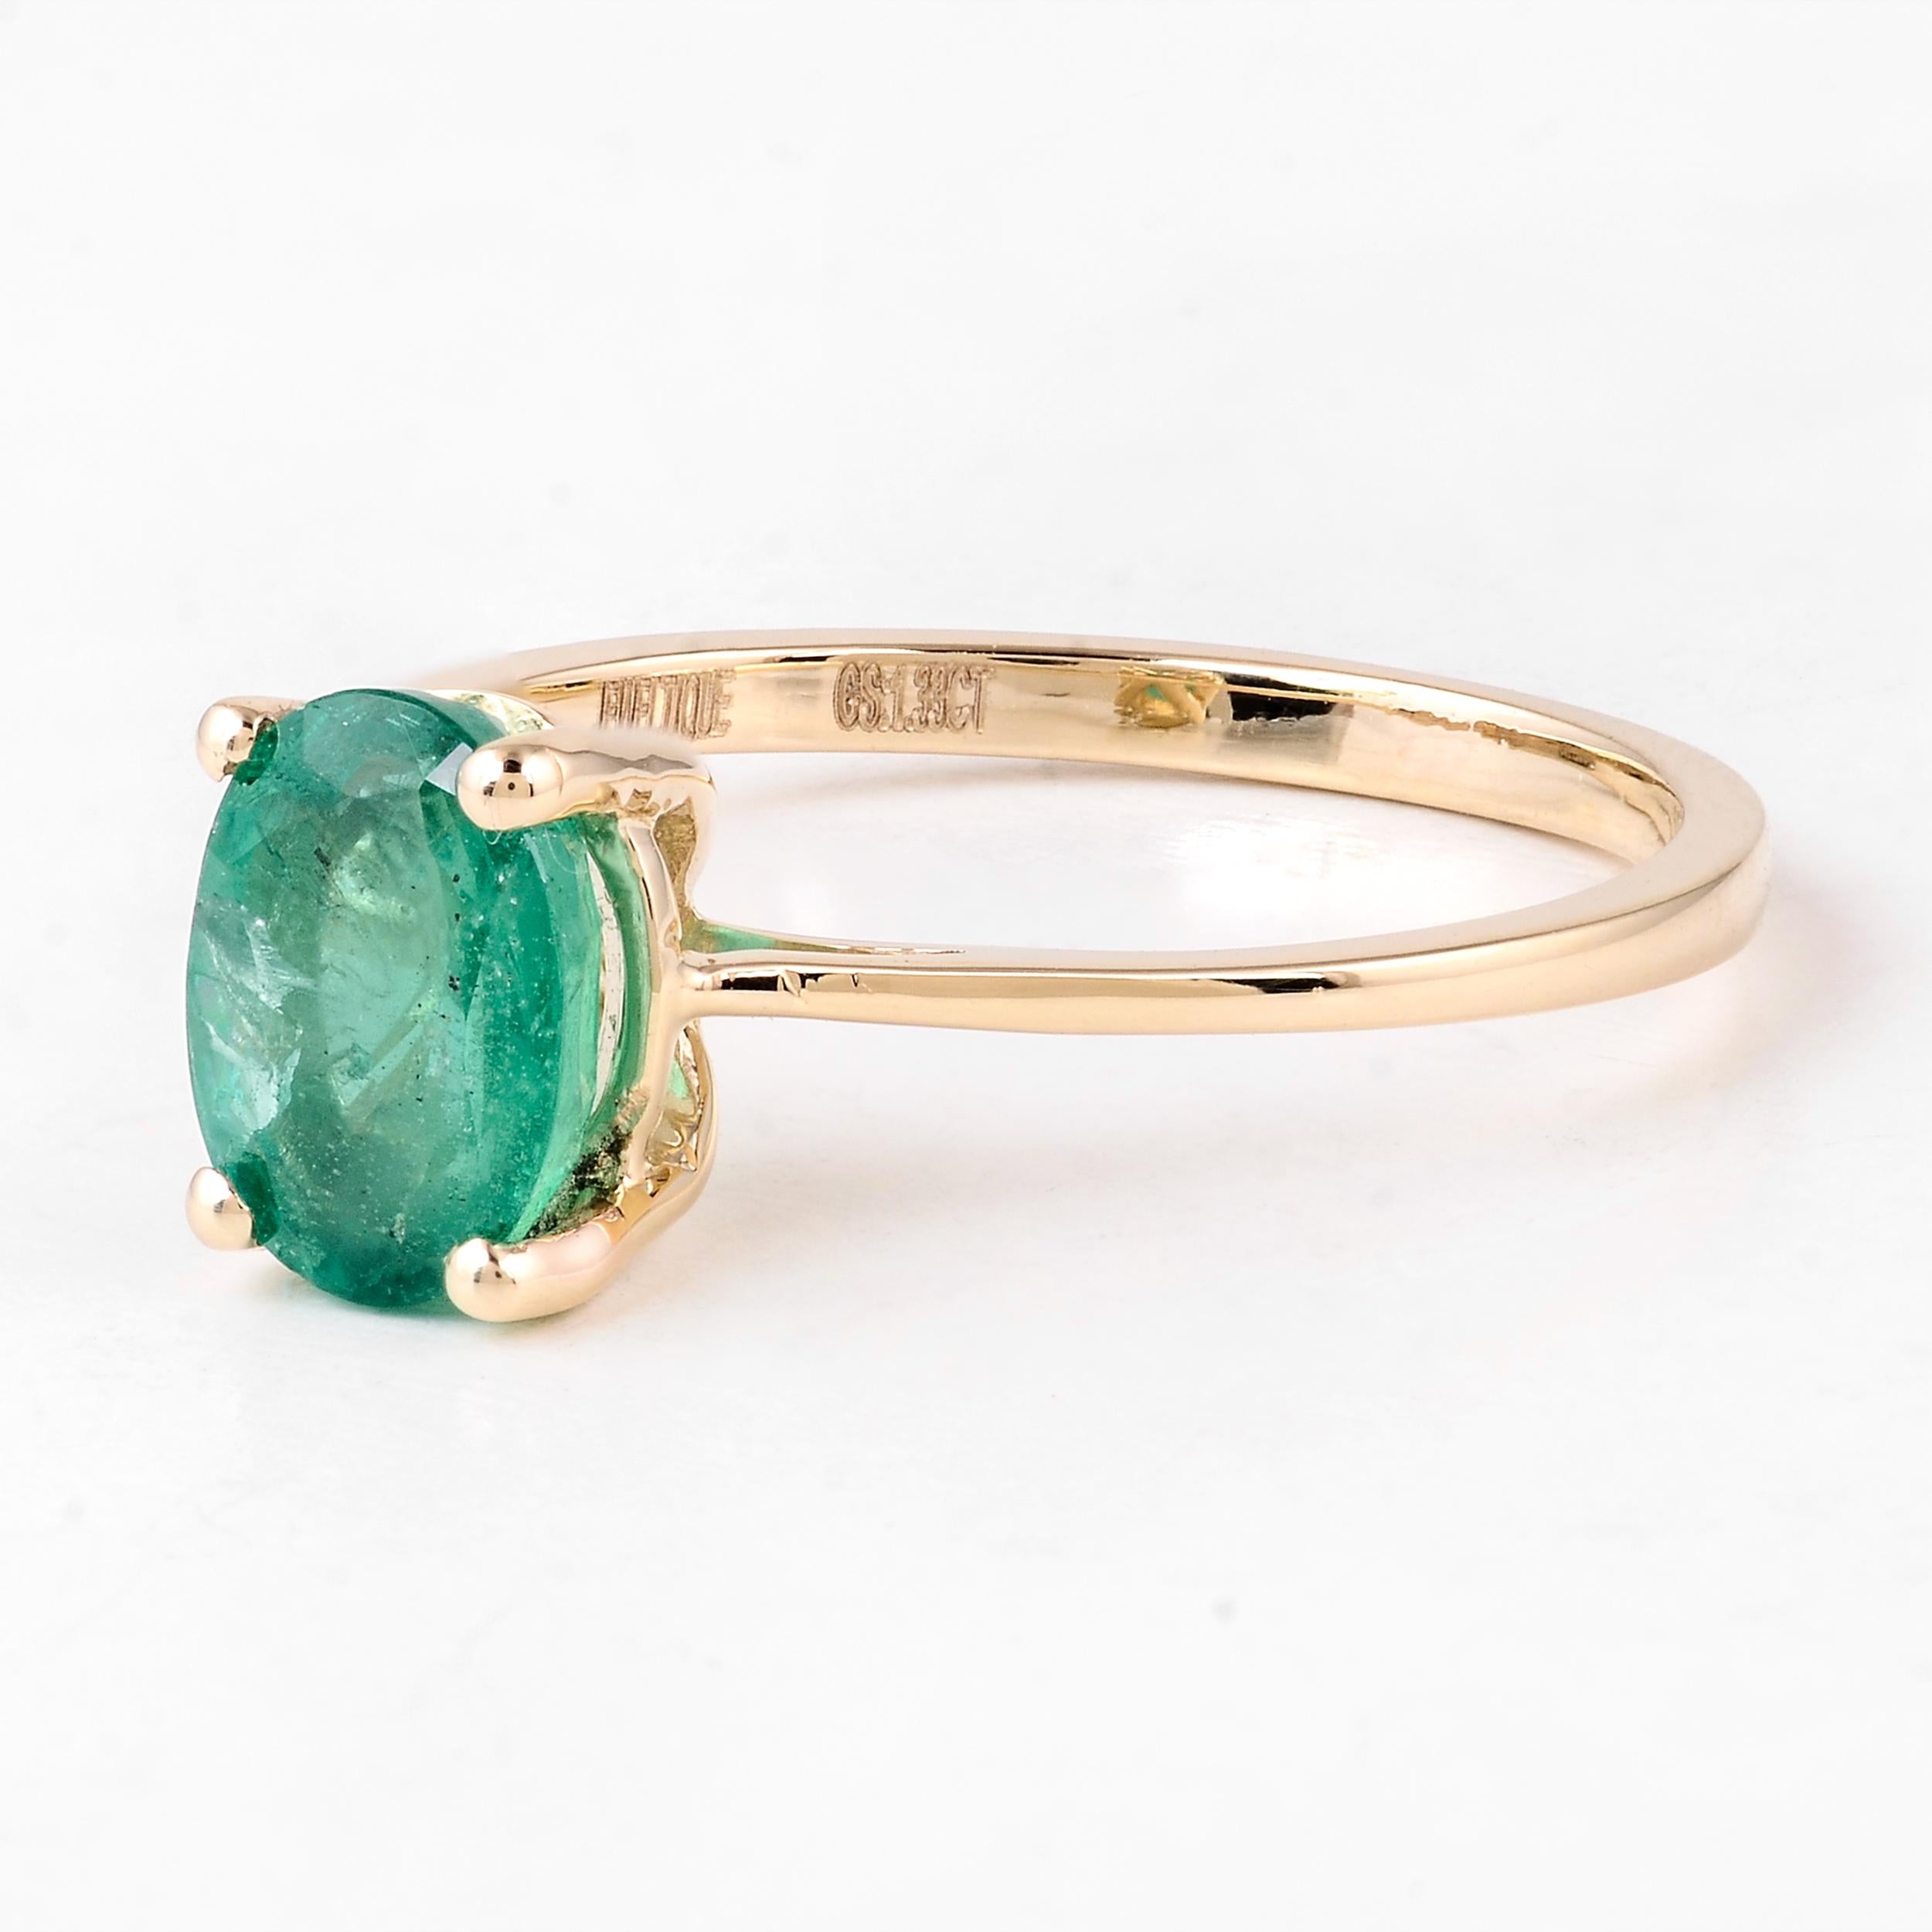 Women's Elegant 14K 1.33ct Emerald Cocktail Ring, Size 7 - Timeless & Elegant Jewelry